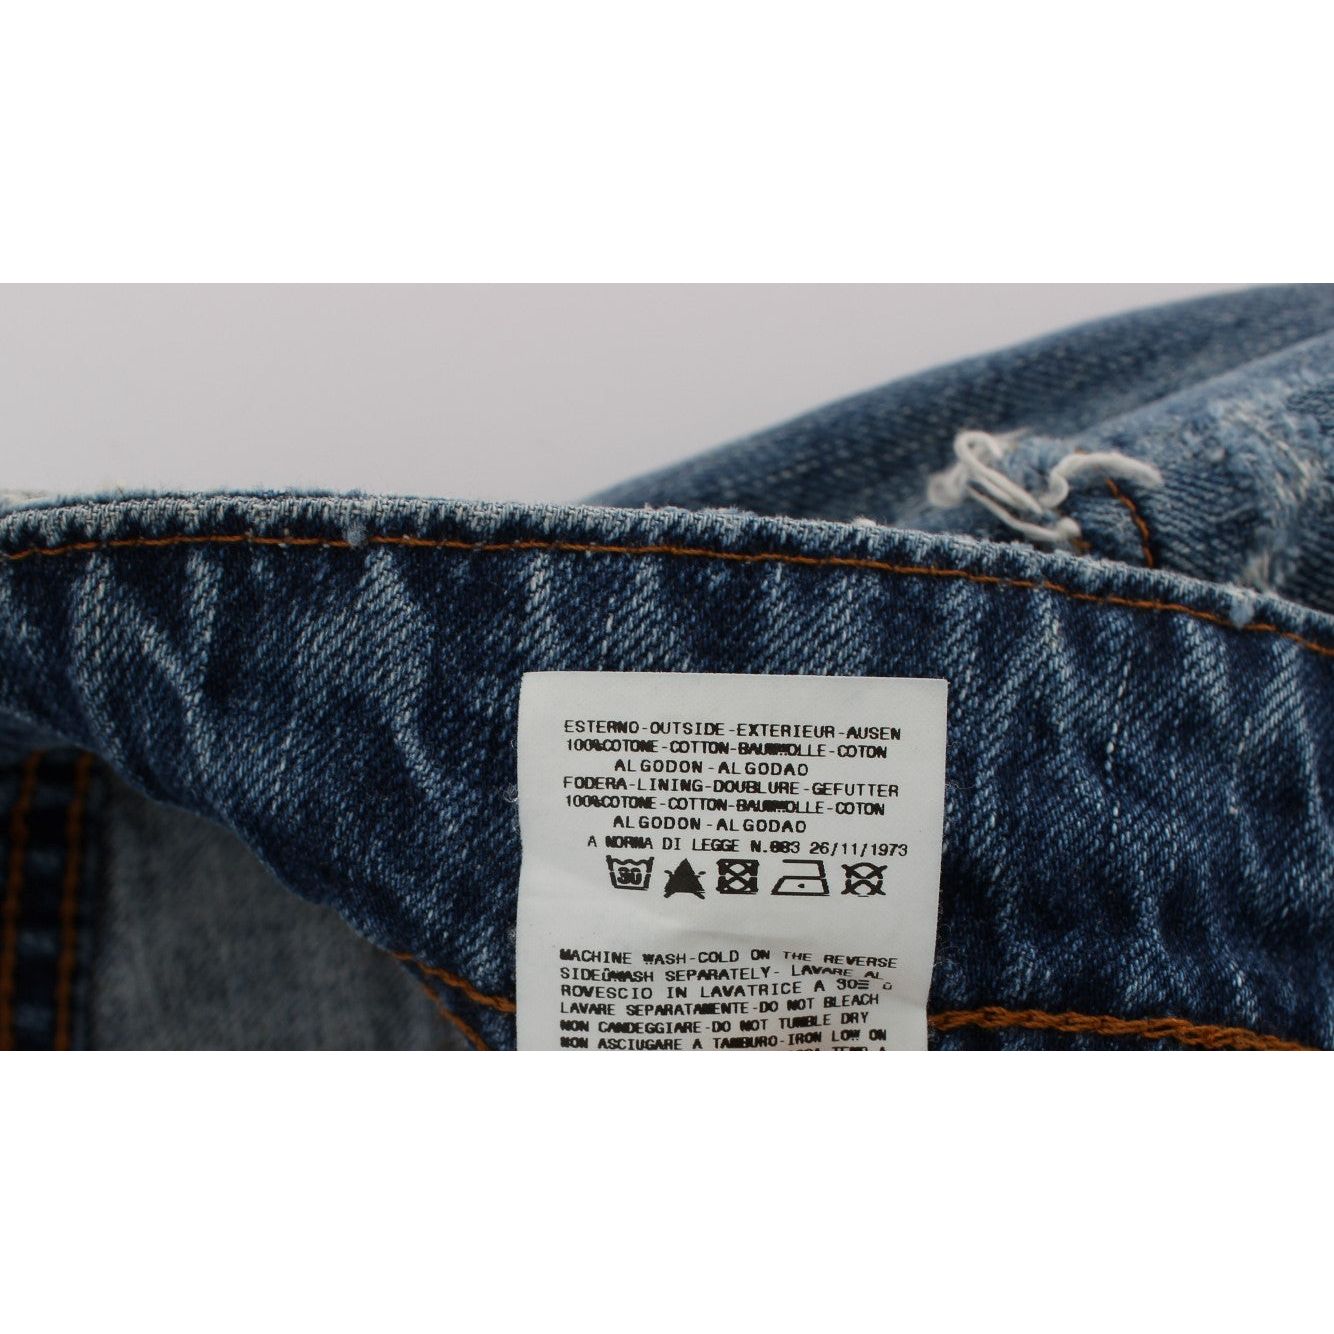 John Galliano Chic Boyfriend Blue Wash Jeans blue-wash-cotton-boyfriend-fit-cropped-jeans-1